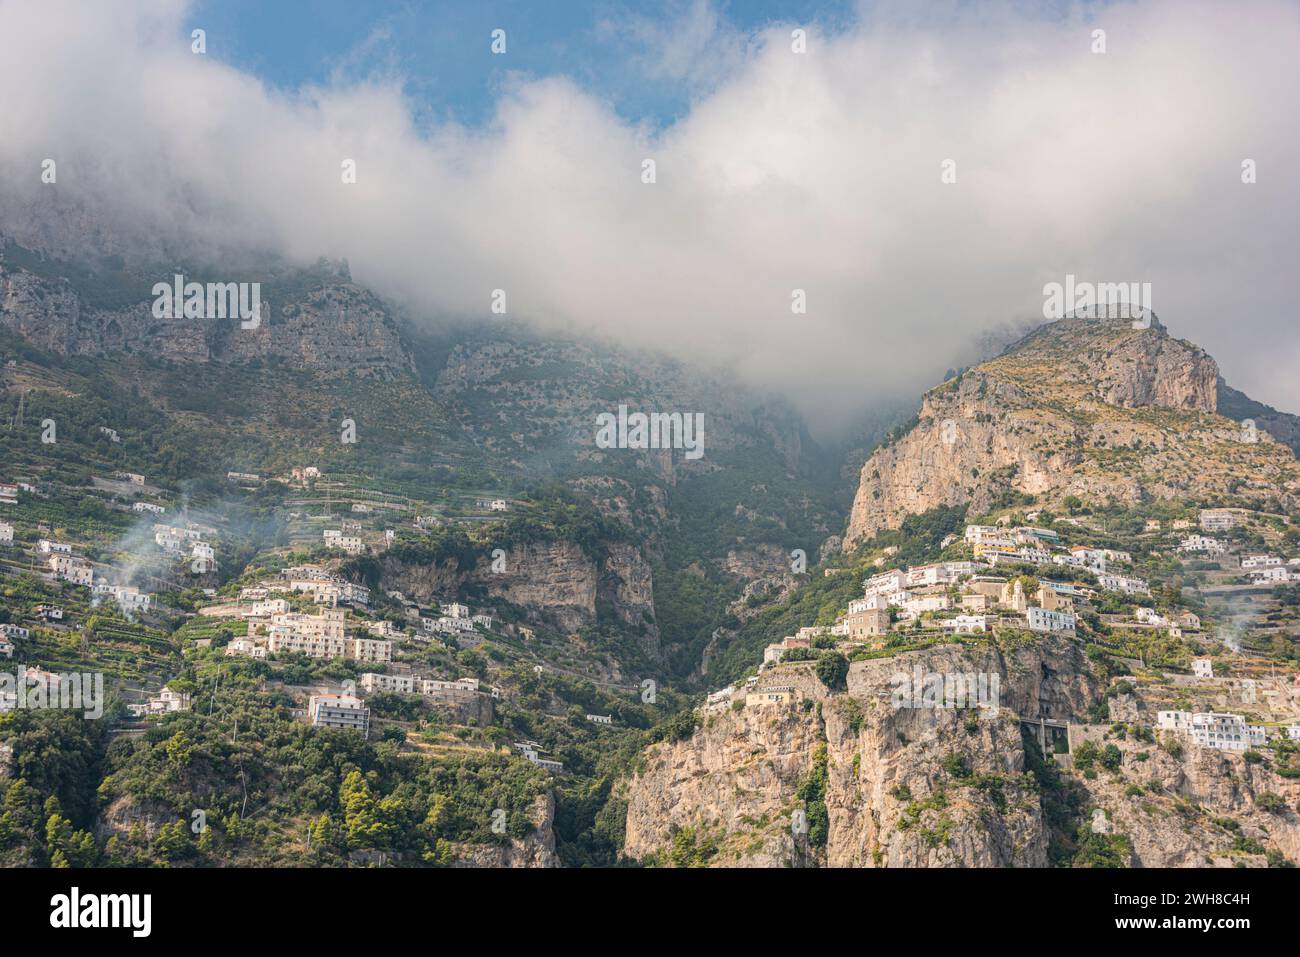 Leaving Positano for Amalfi by boat on the Amalfi coast, Campagnia, Italy Stock Photo